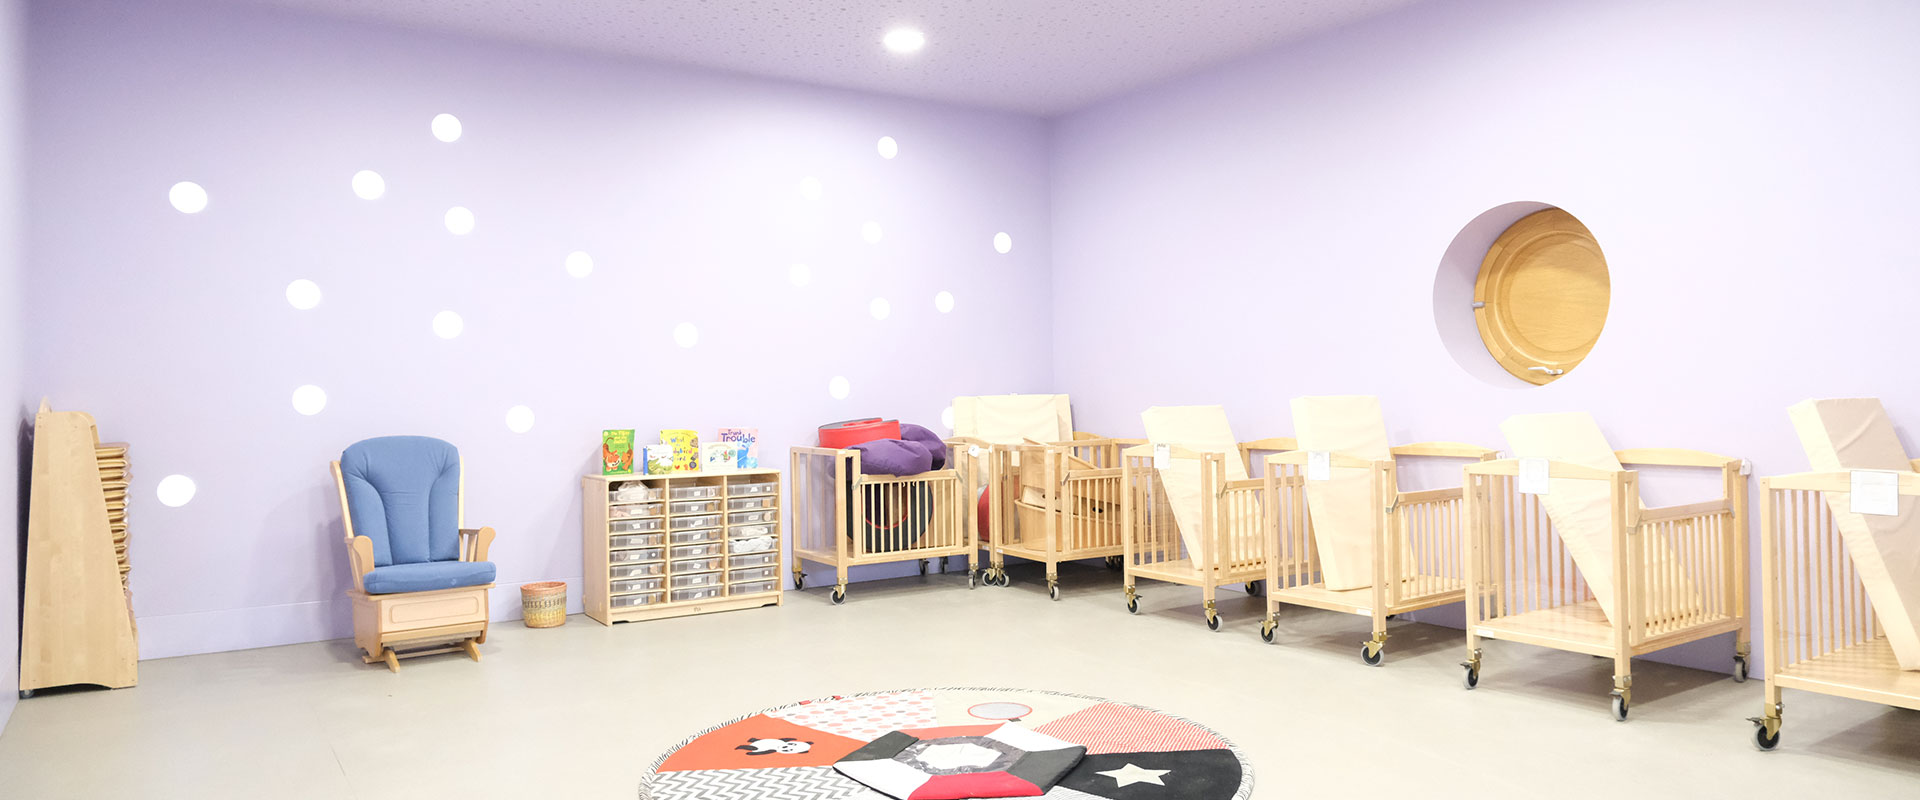 Bright Horizons Eddington Day Nursery and Preschool Sleep Room